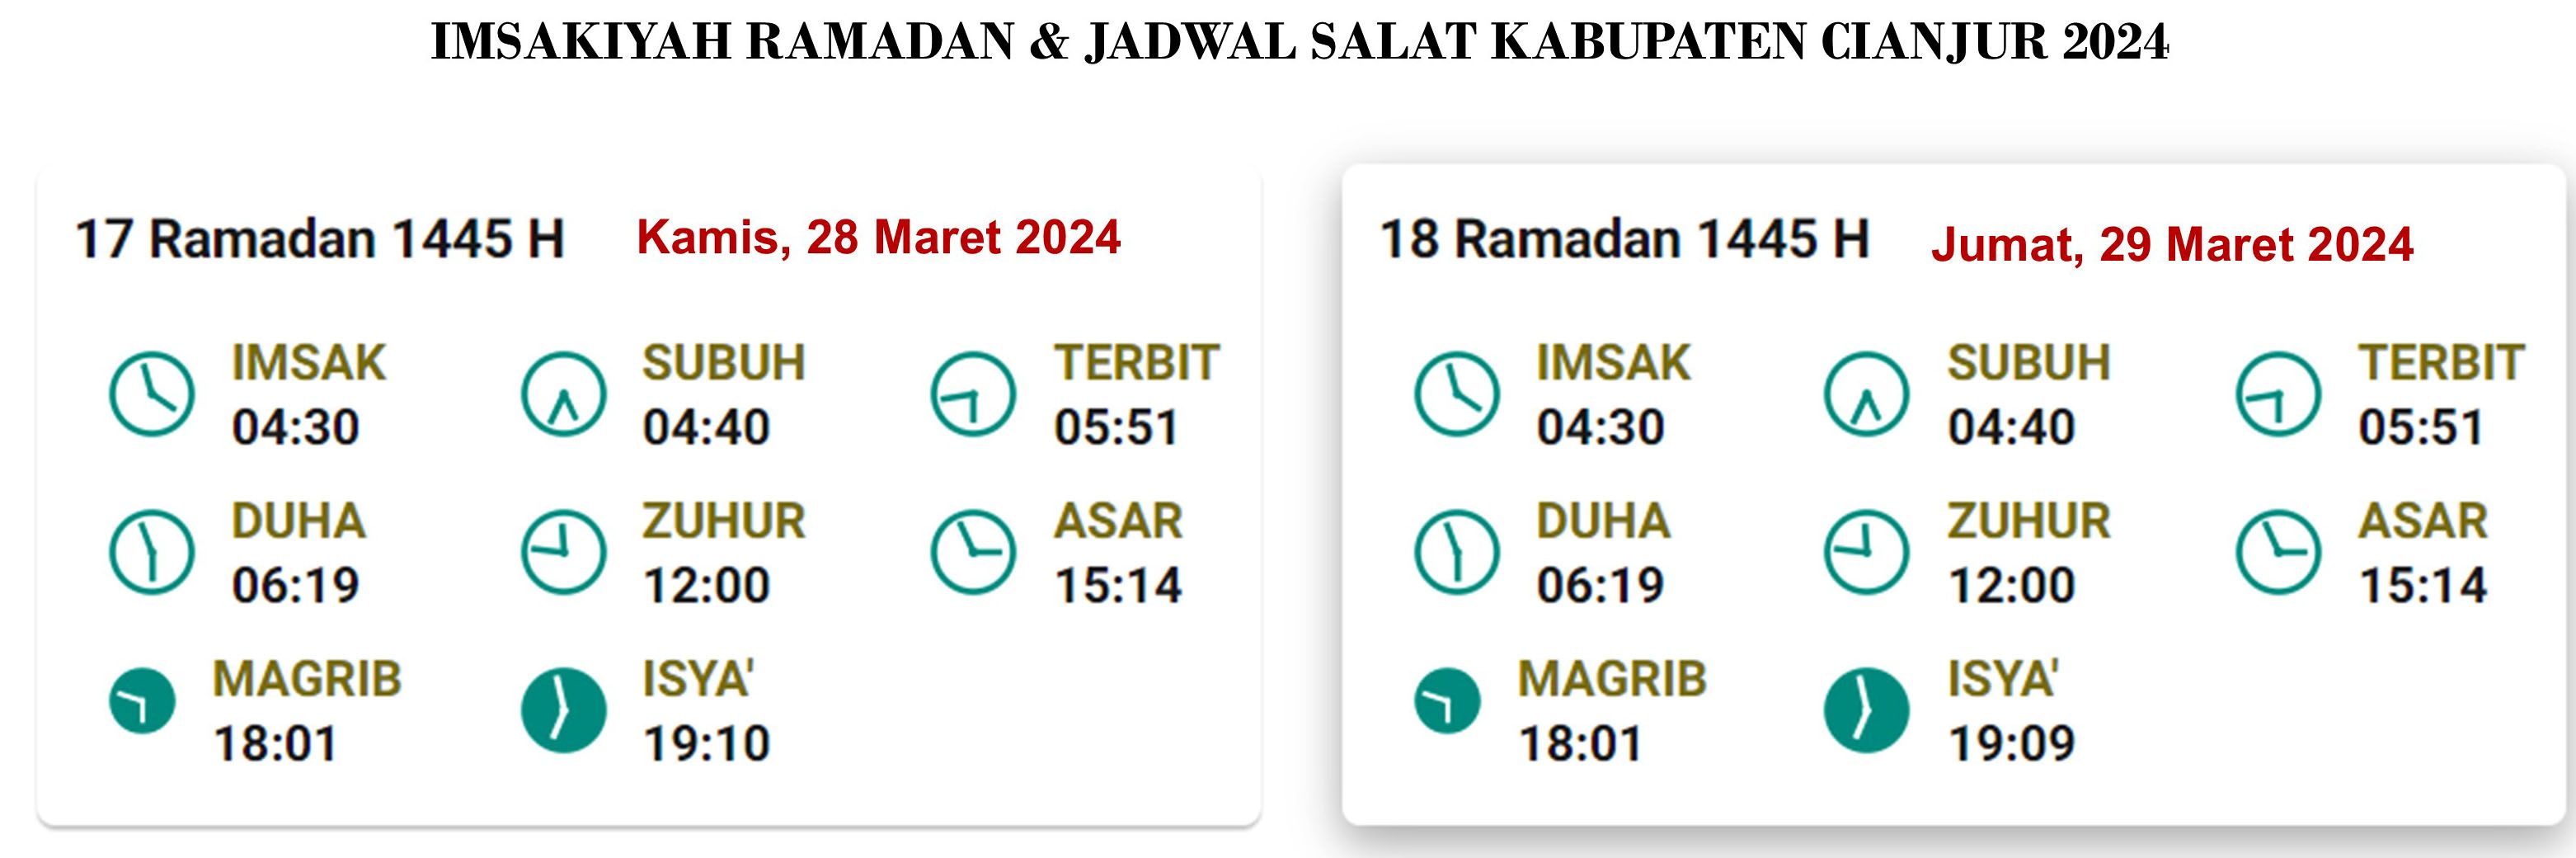 Cianjur, Jadwal Imsakiyah dan Salat, Selasa, 28 Maret 2024